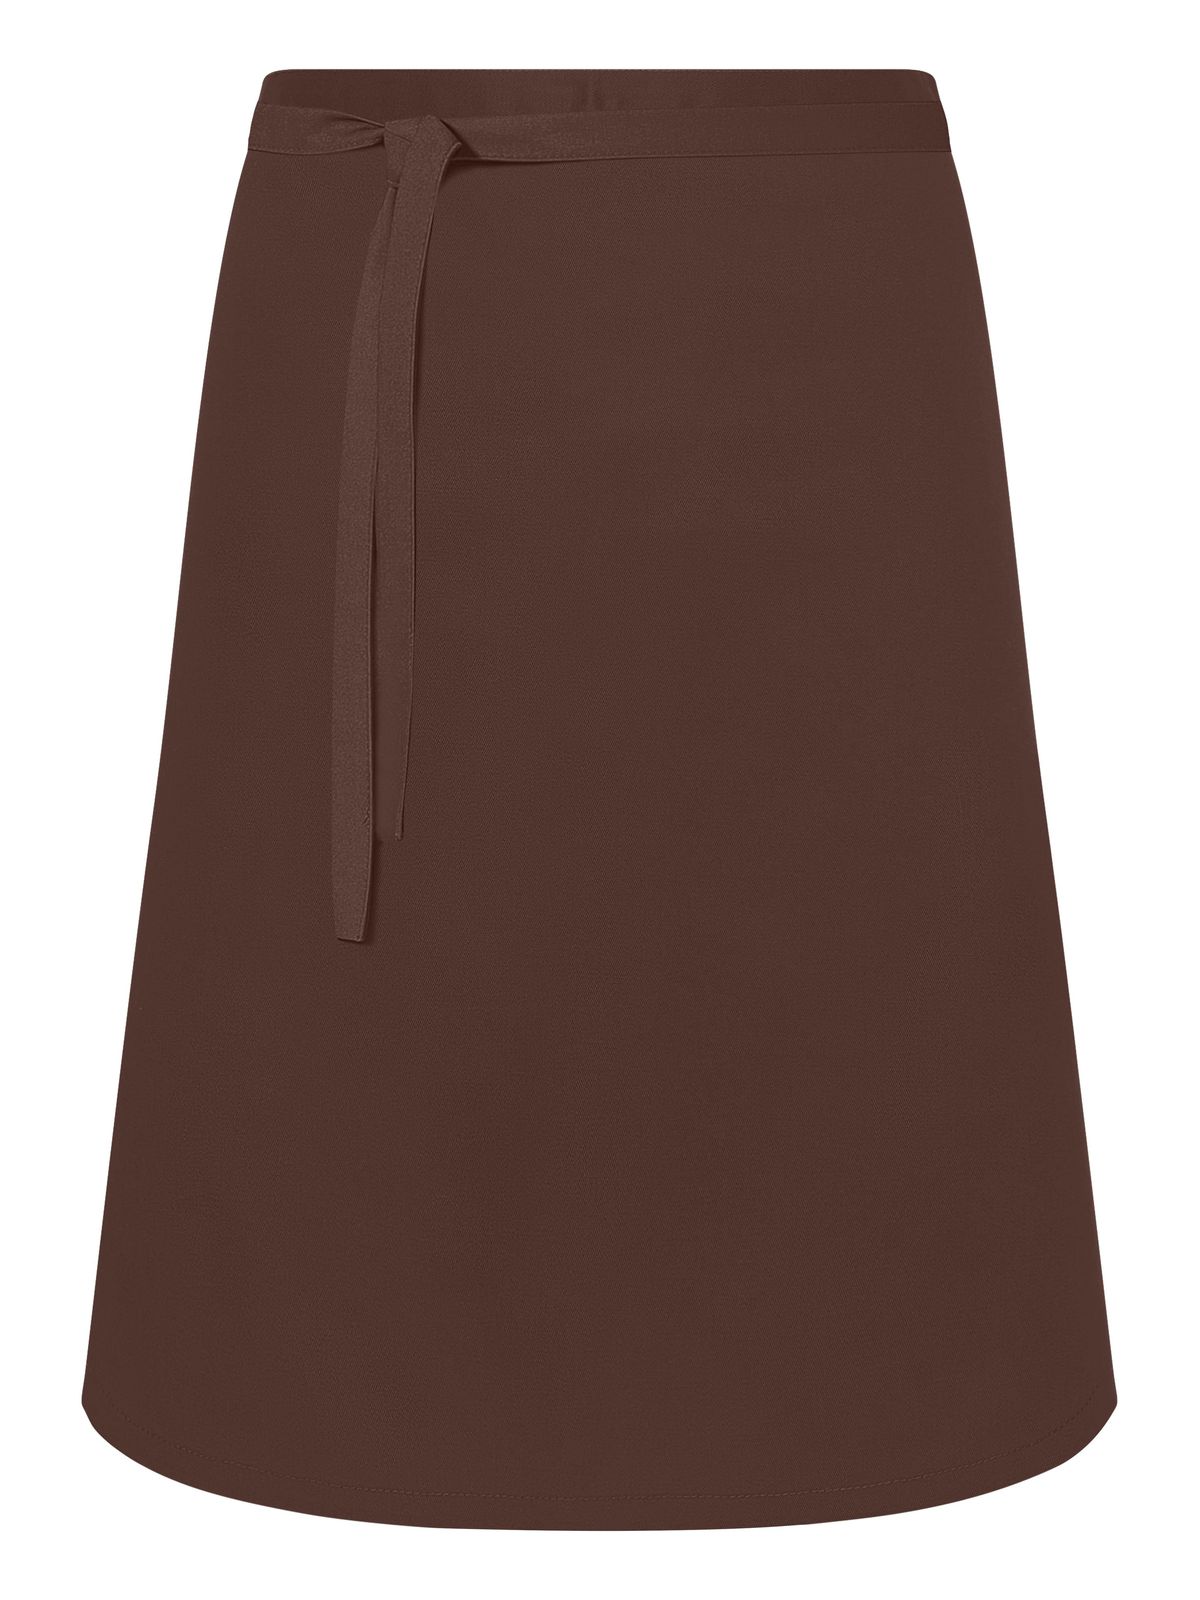 apron-short-brown.webp